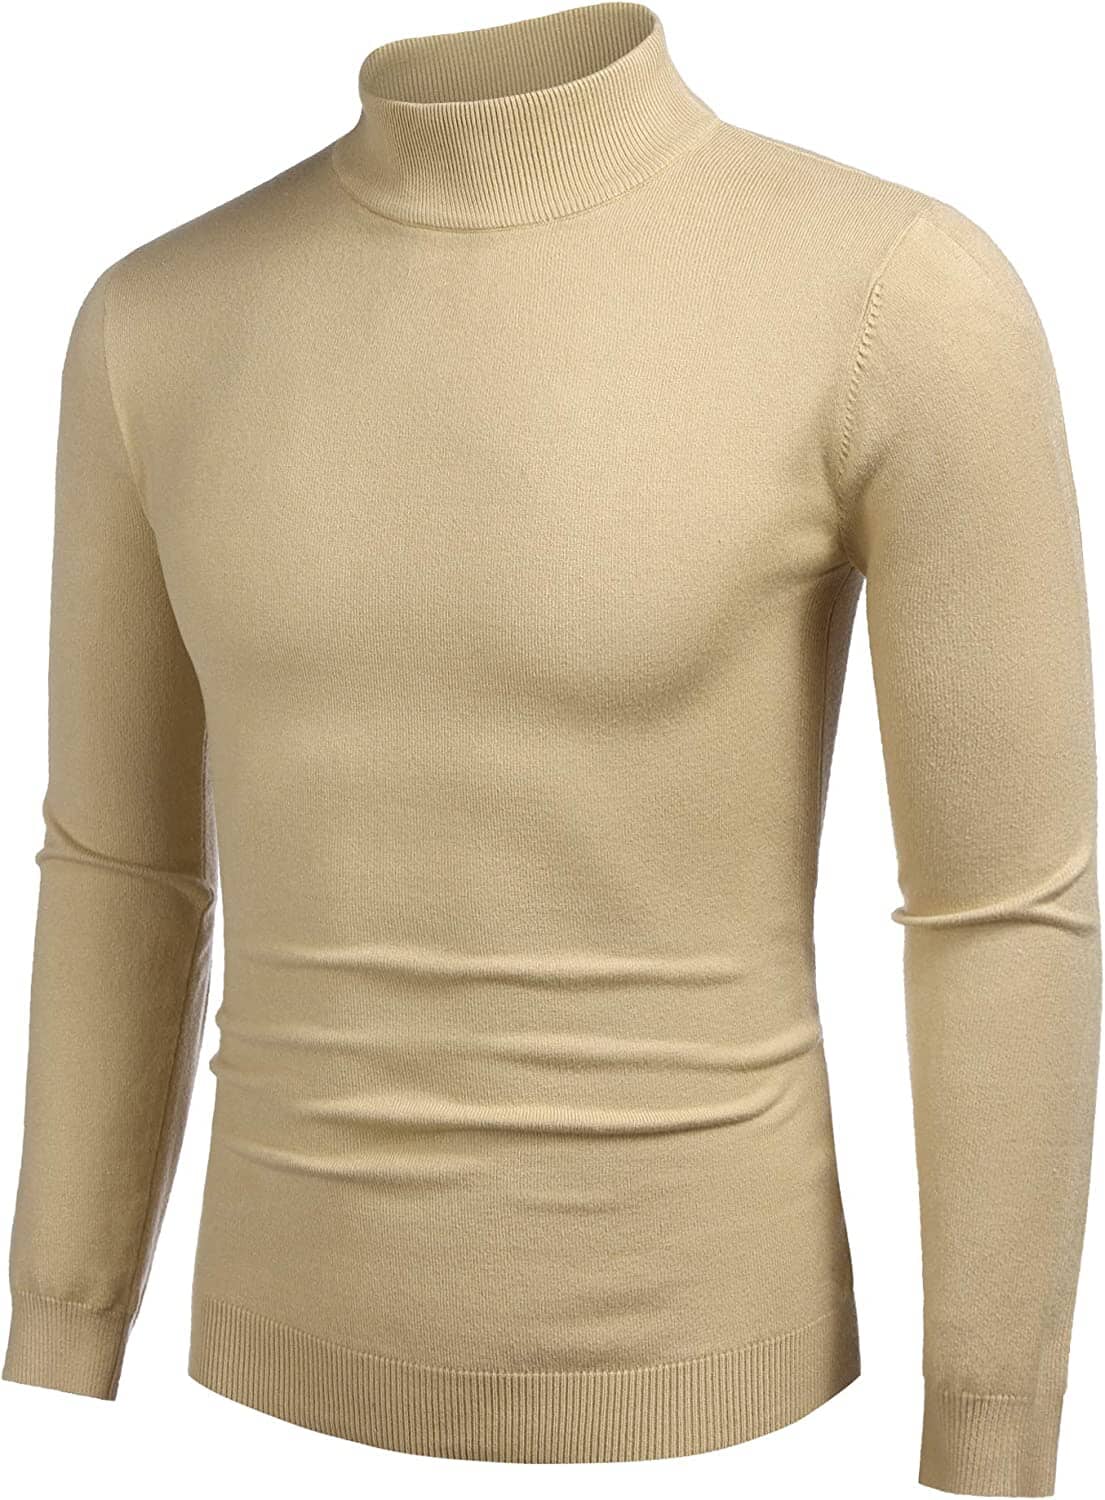 Coofandy Turtleneck Pullover: Lightweight & Warm Sweaters – COOFANDY